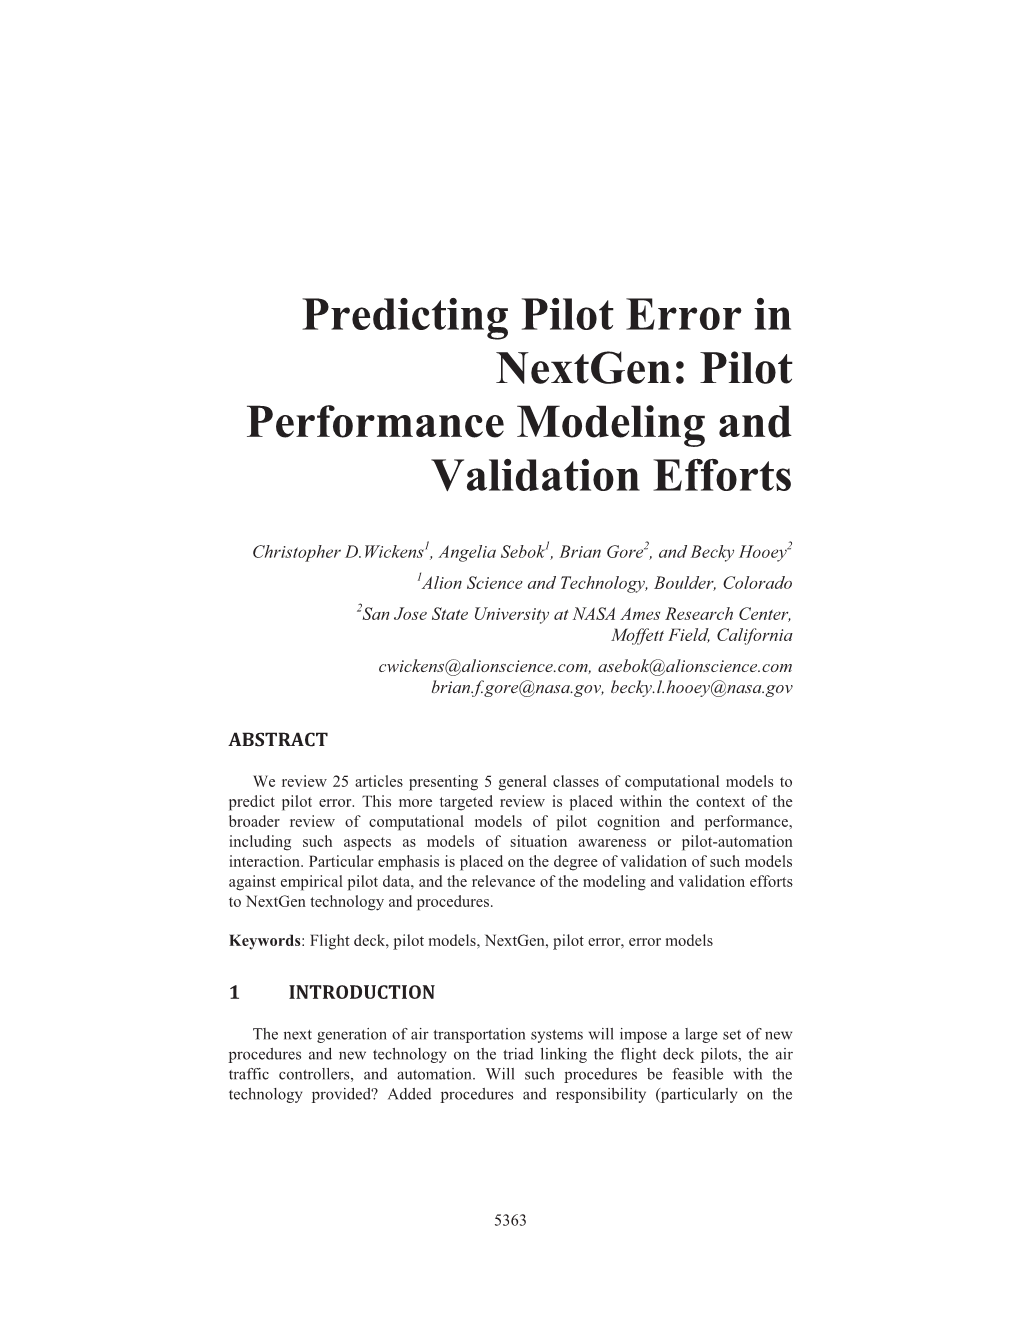 Pilot Performance Modeling and Validation Efforts